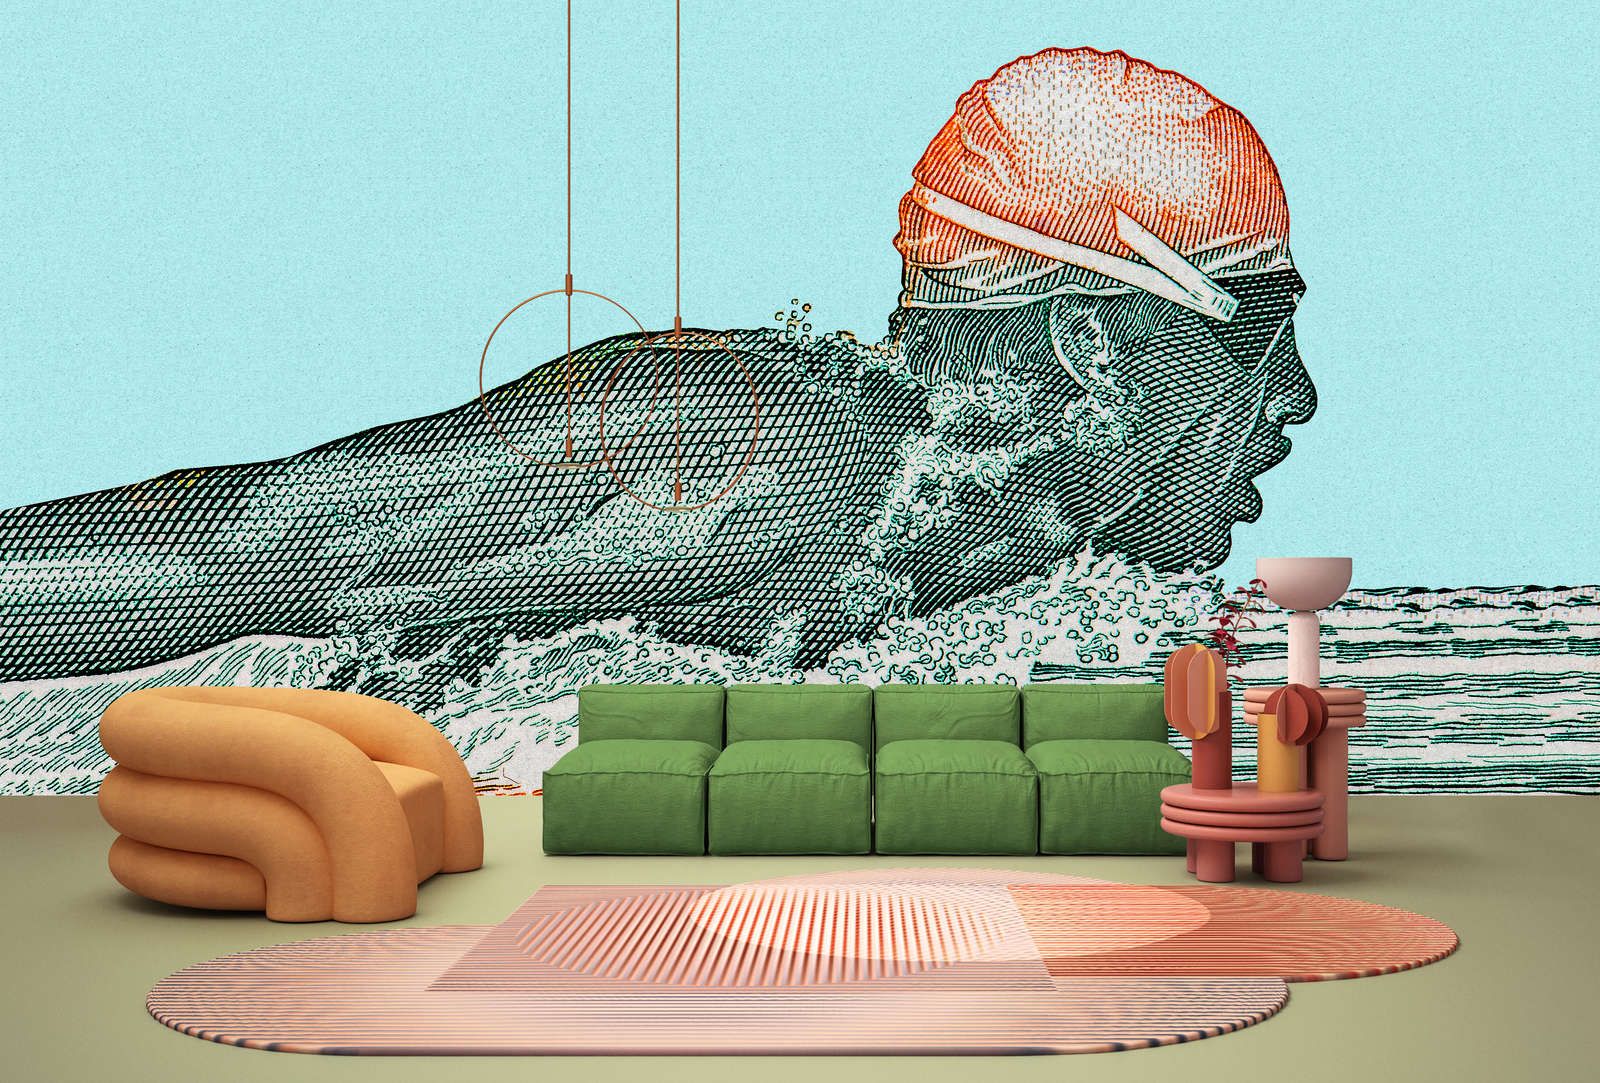             Photo wallpaper »aquaman« - swimmer in pixel design - petrol with kraft paper texture | matt, smooth non-woven fabric
        